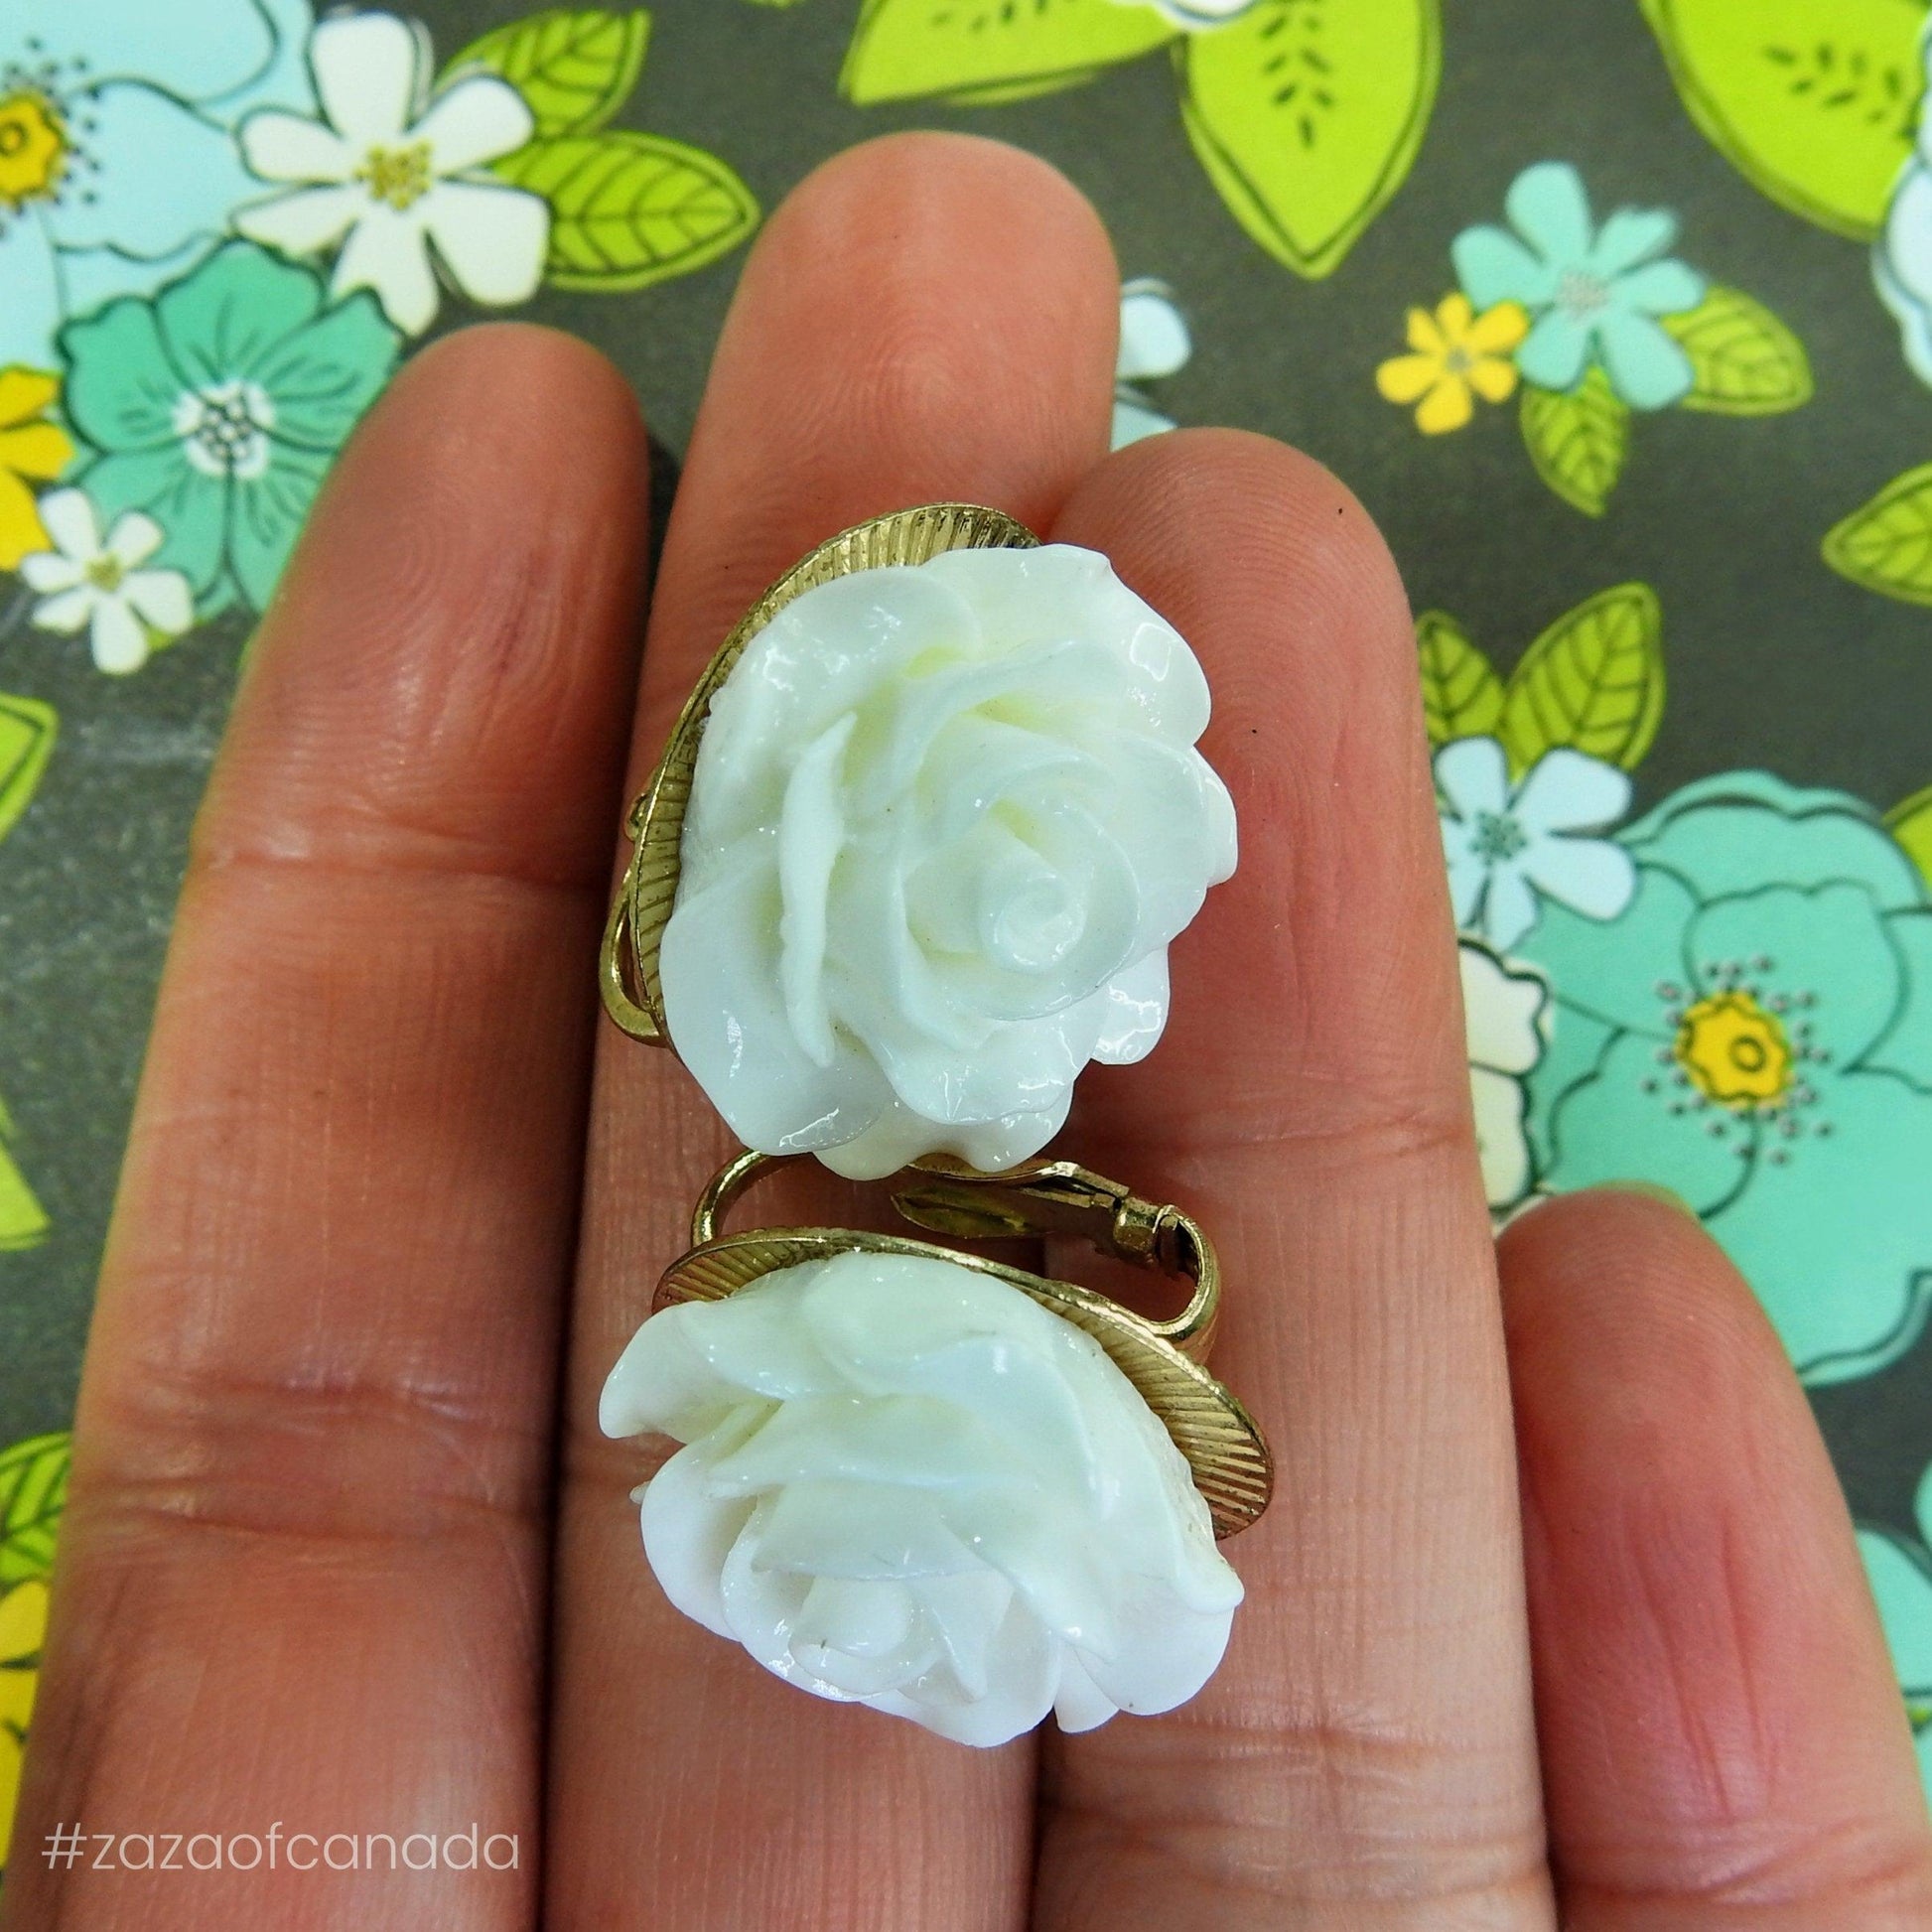 Vintage style white clip on earrings, flower earrings for non pierced ears